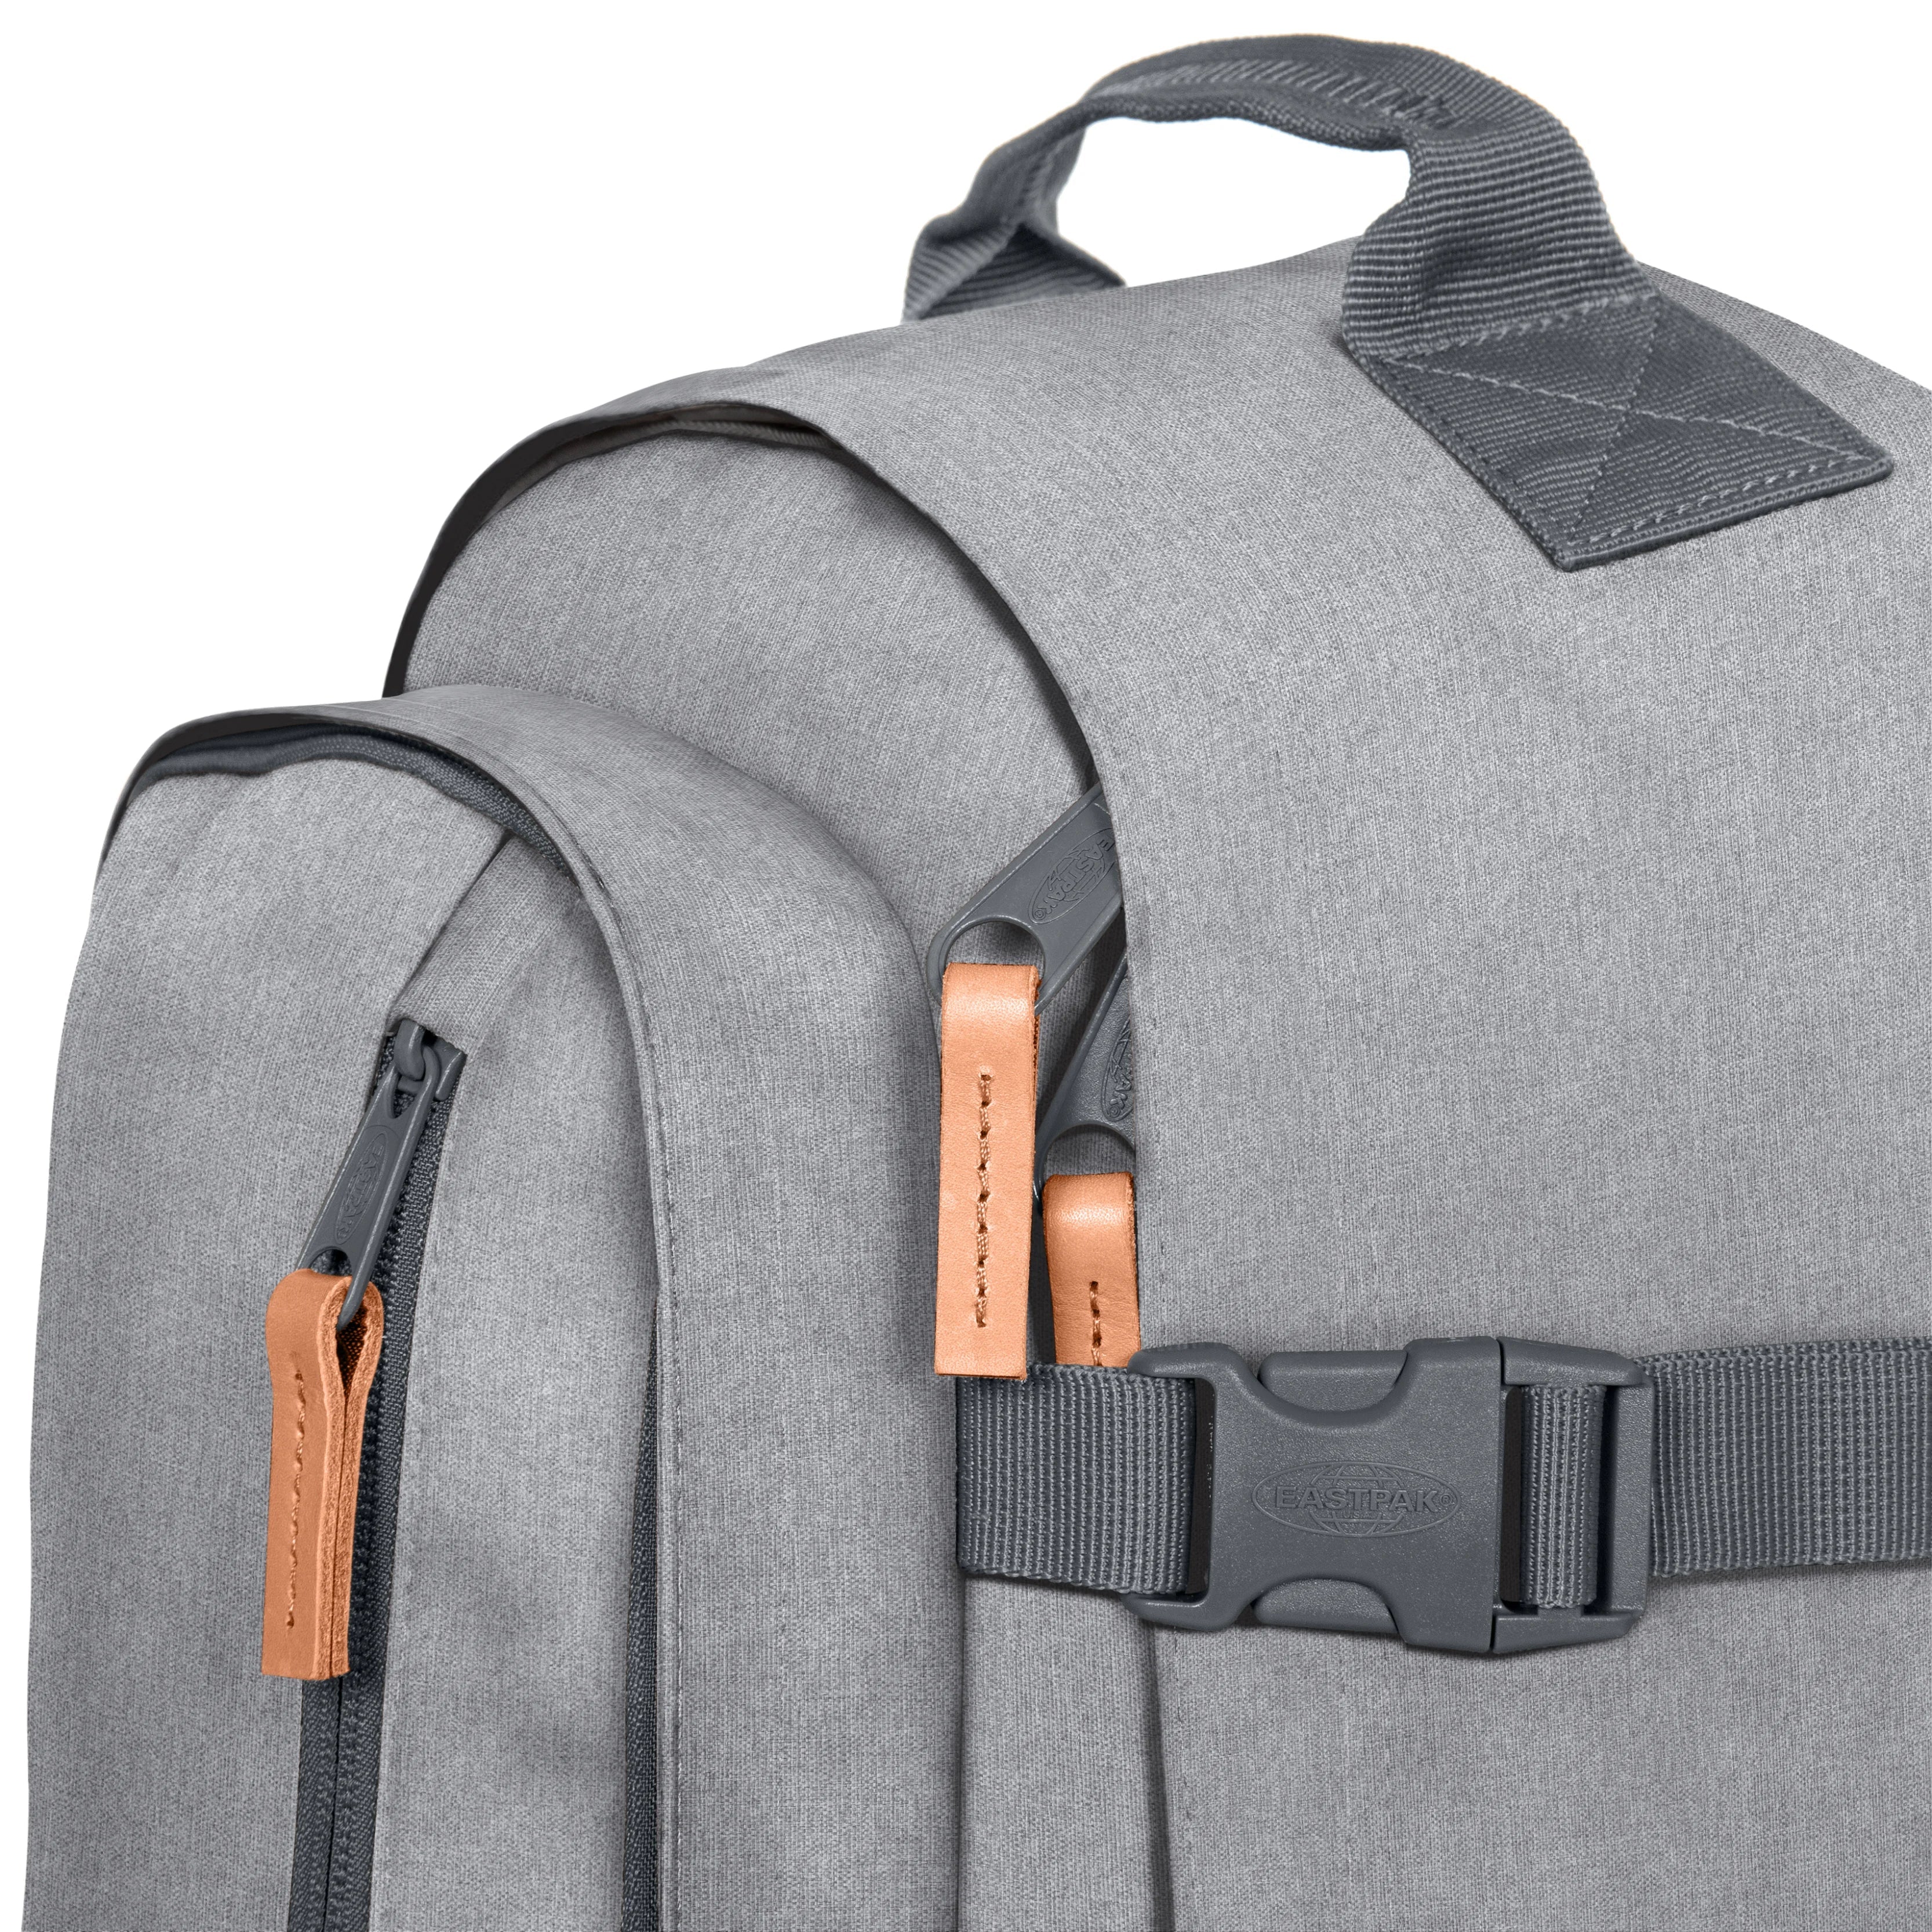 Eastpak Authentic Smallker Laptop Backpack 45 cm - CS Mono Black3